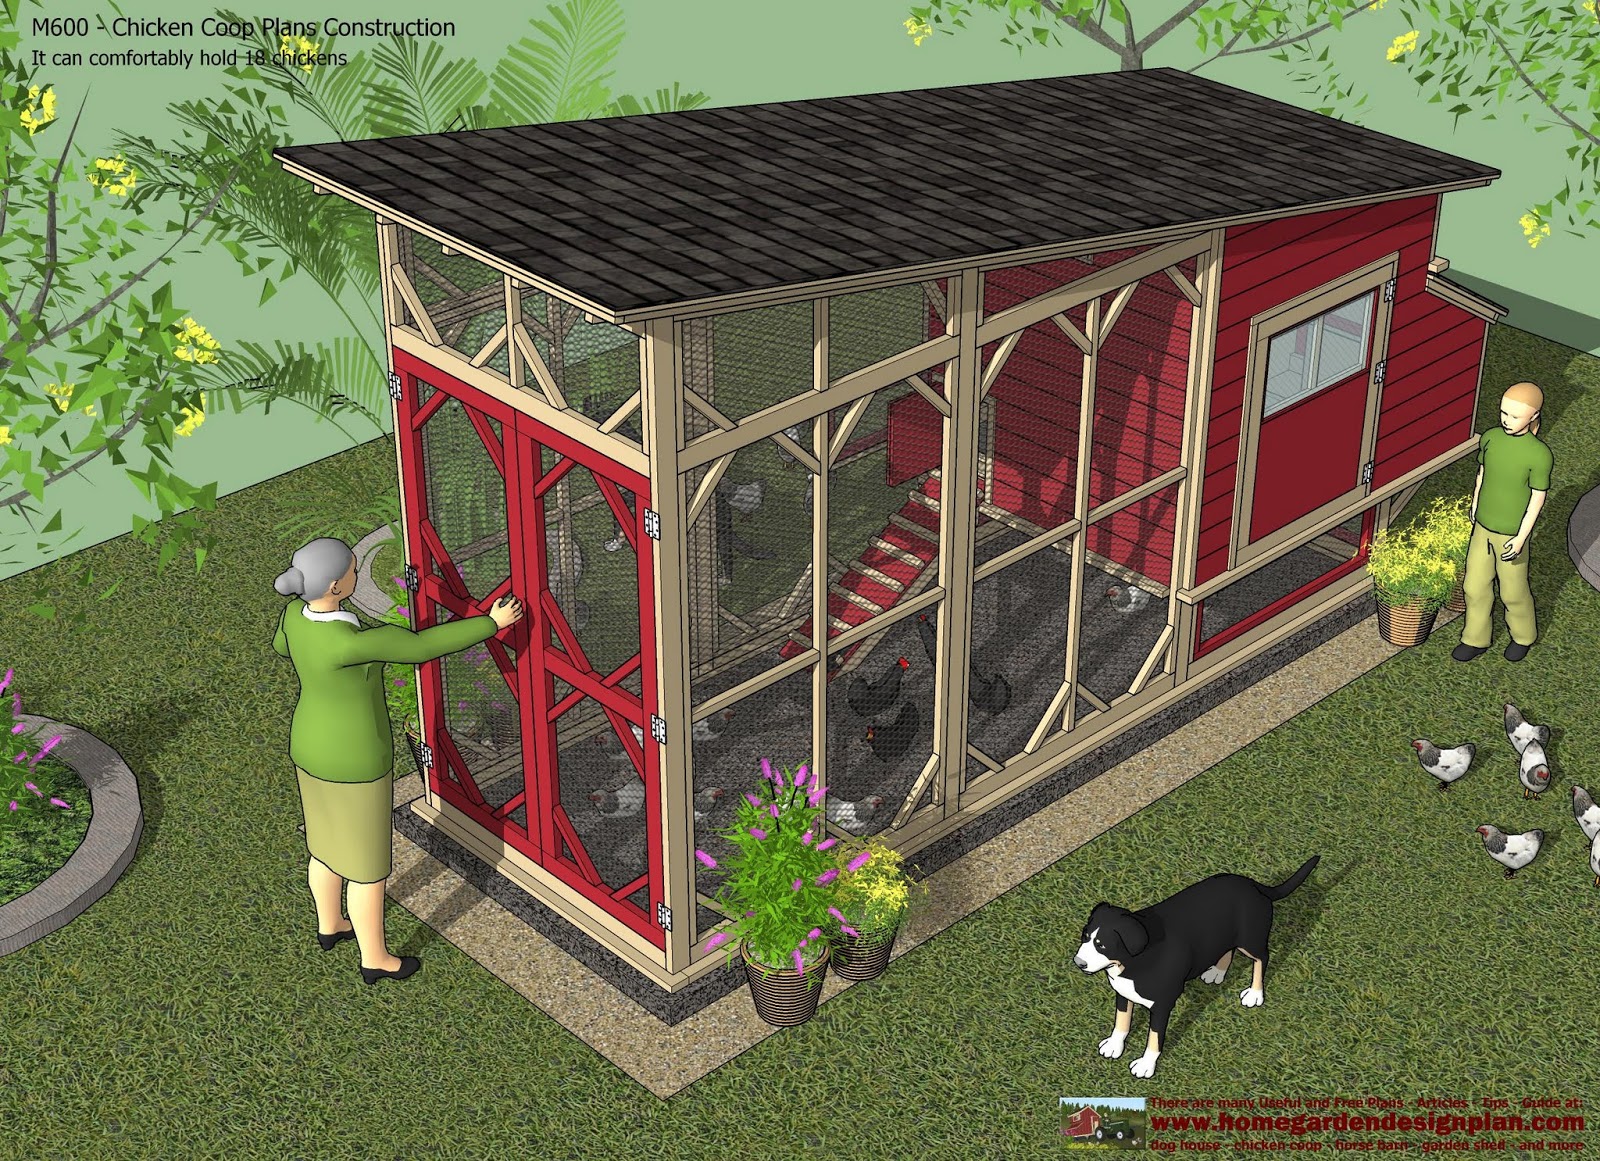 Chicken Coop Plans Construction - Chicken Coop Design - How To Build ...